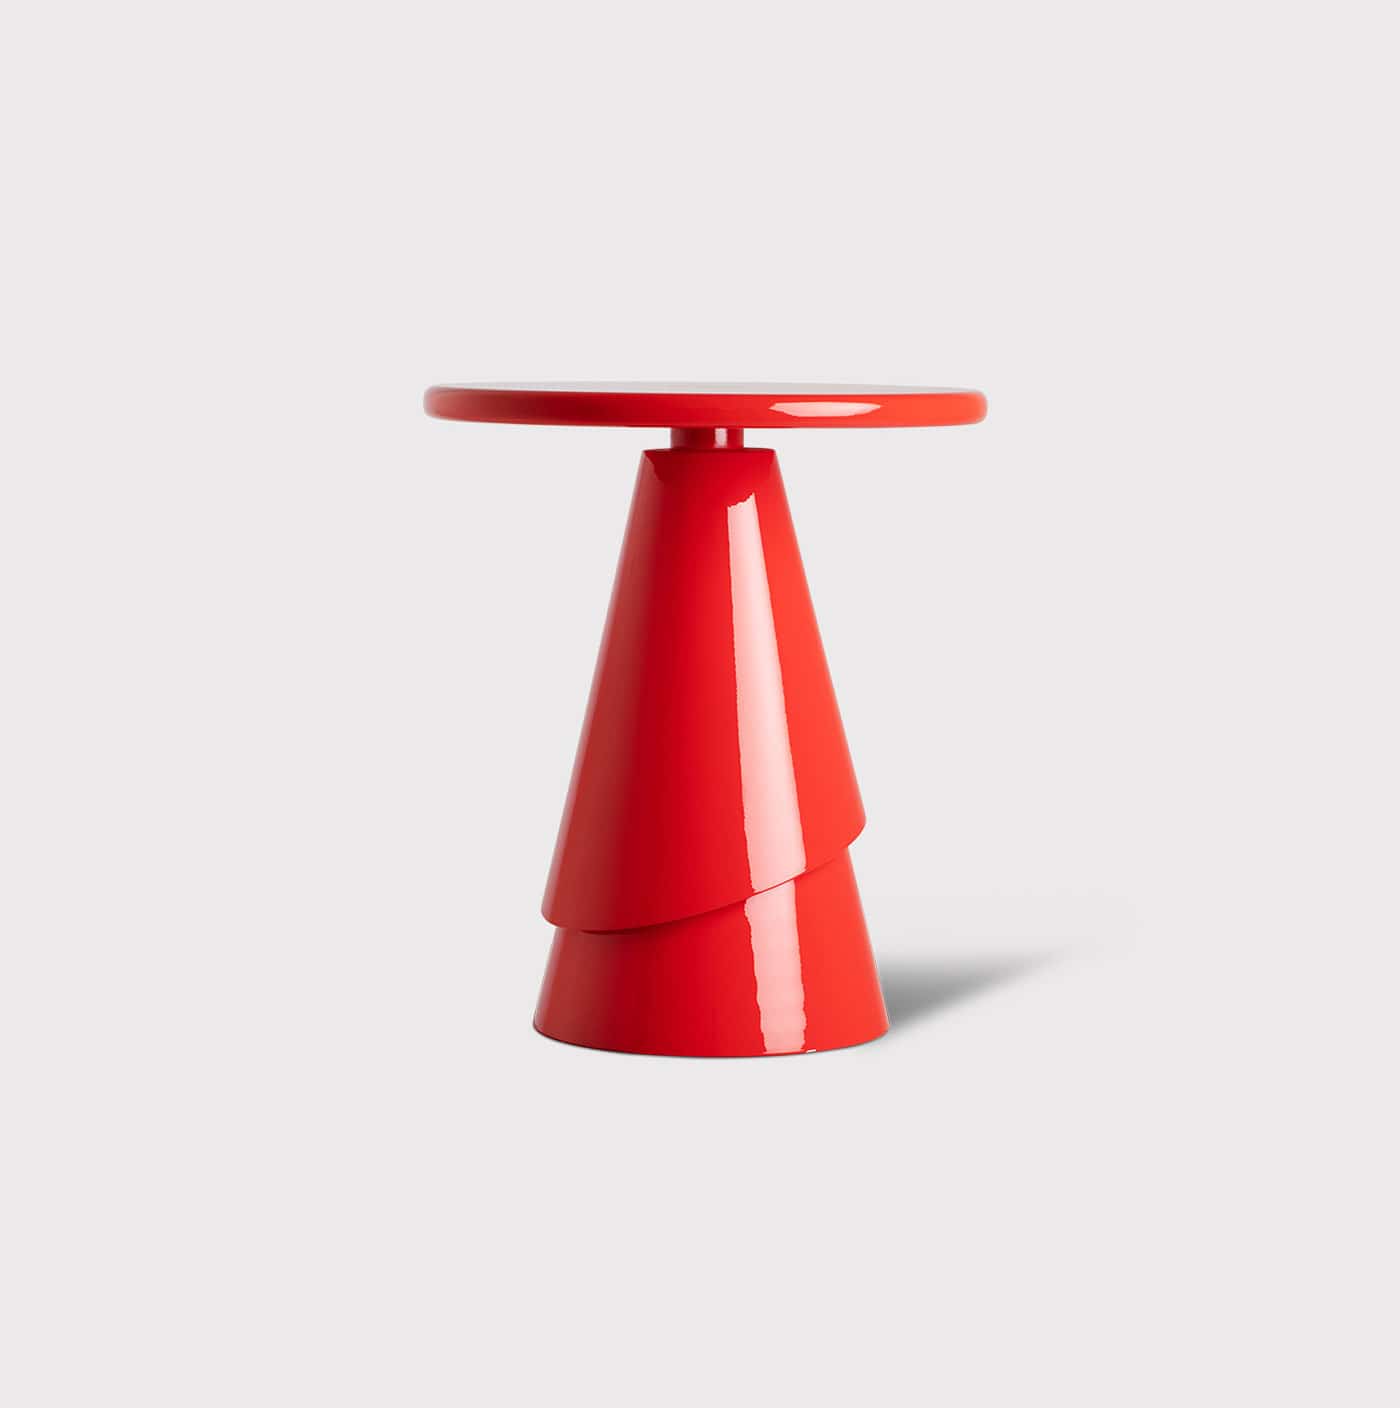 SUMMIT-table-Indy-wilson-furniture-winner-vivid-2020-1400web